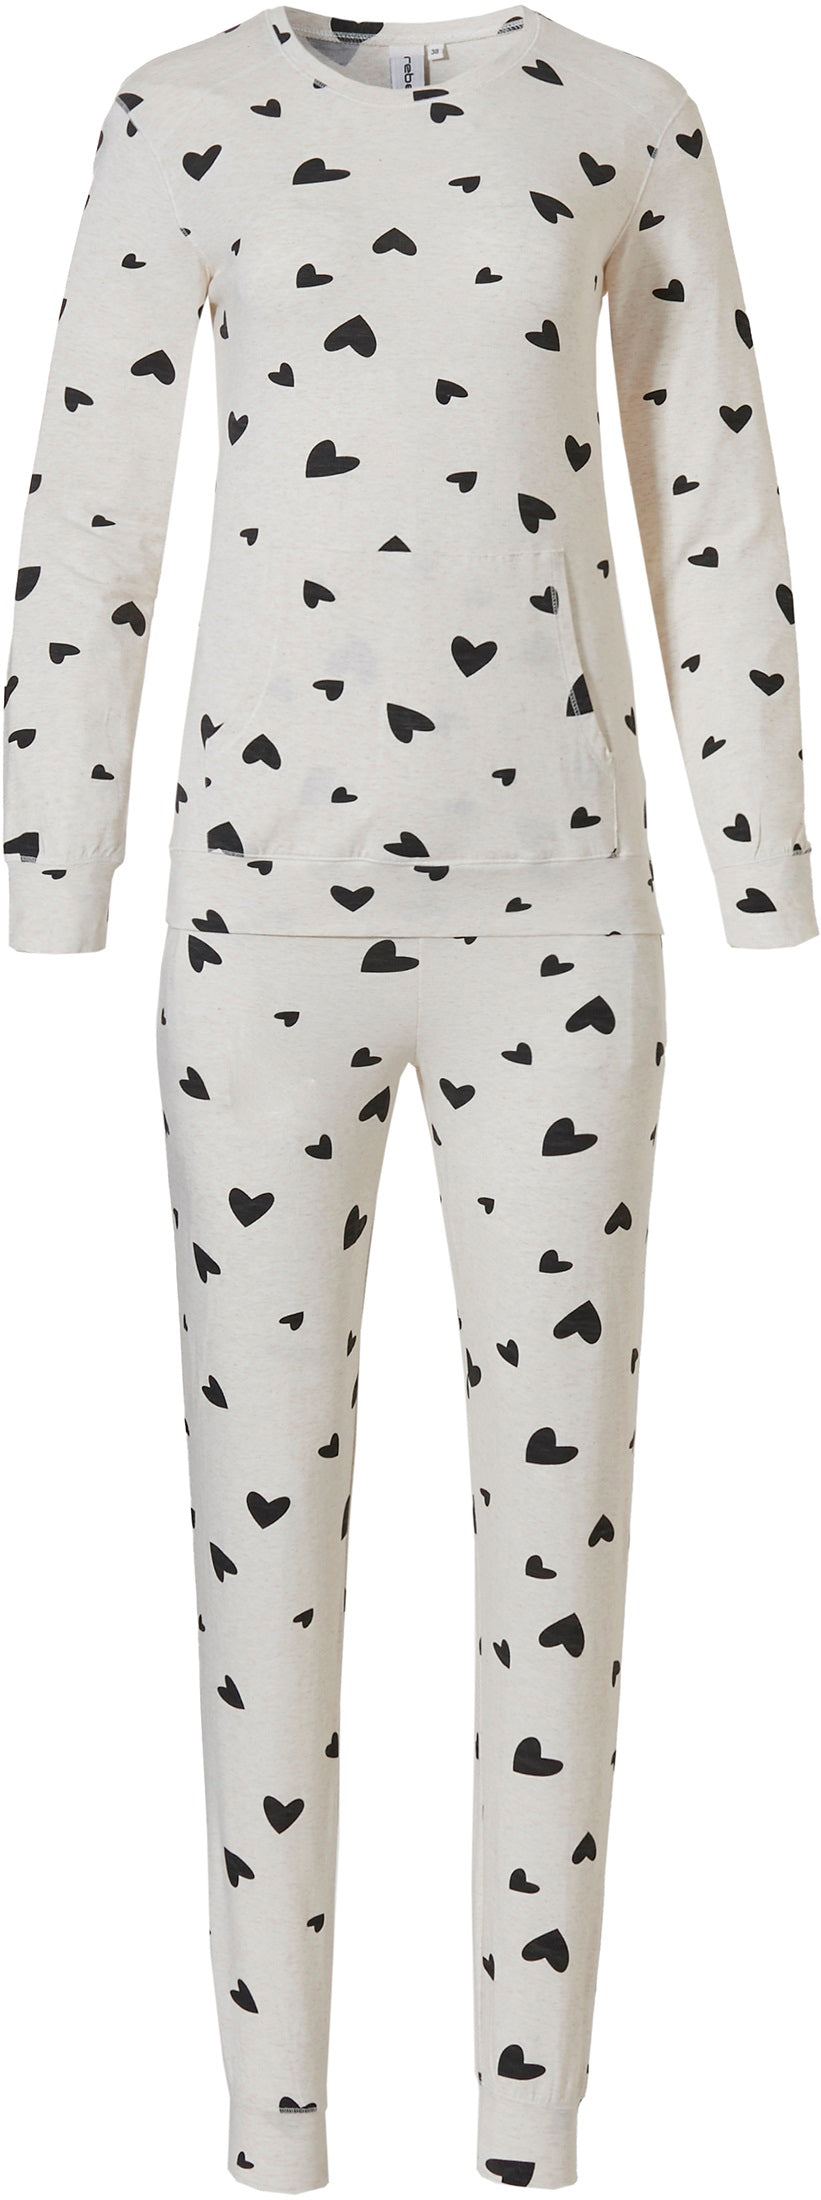 Rebelle Pastunette Ladies Off White & Black Love Heart Print Pyjama Set